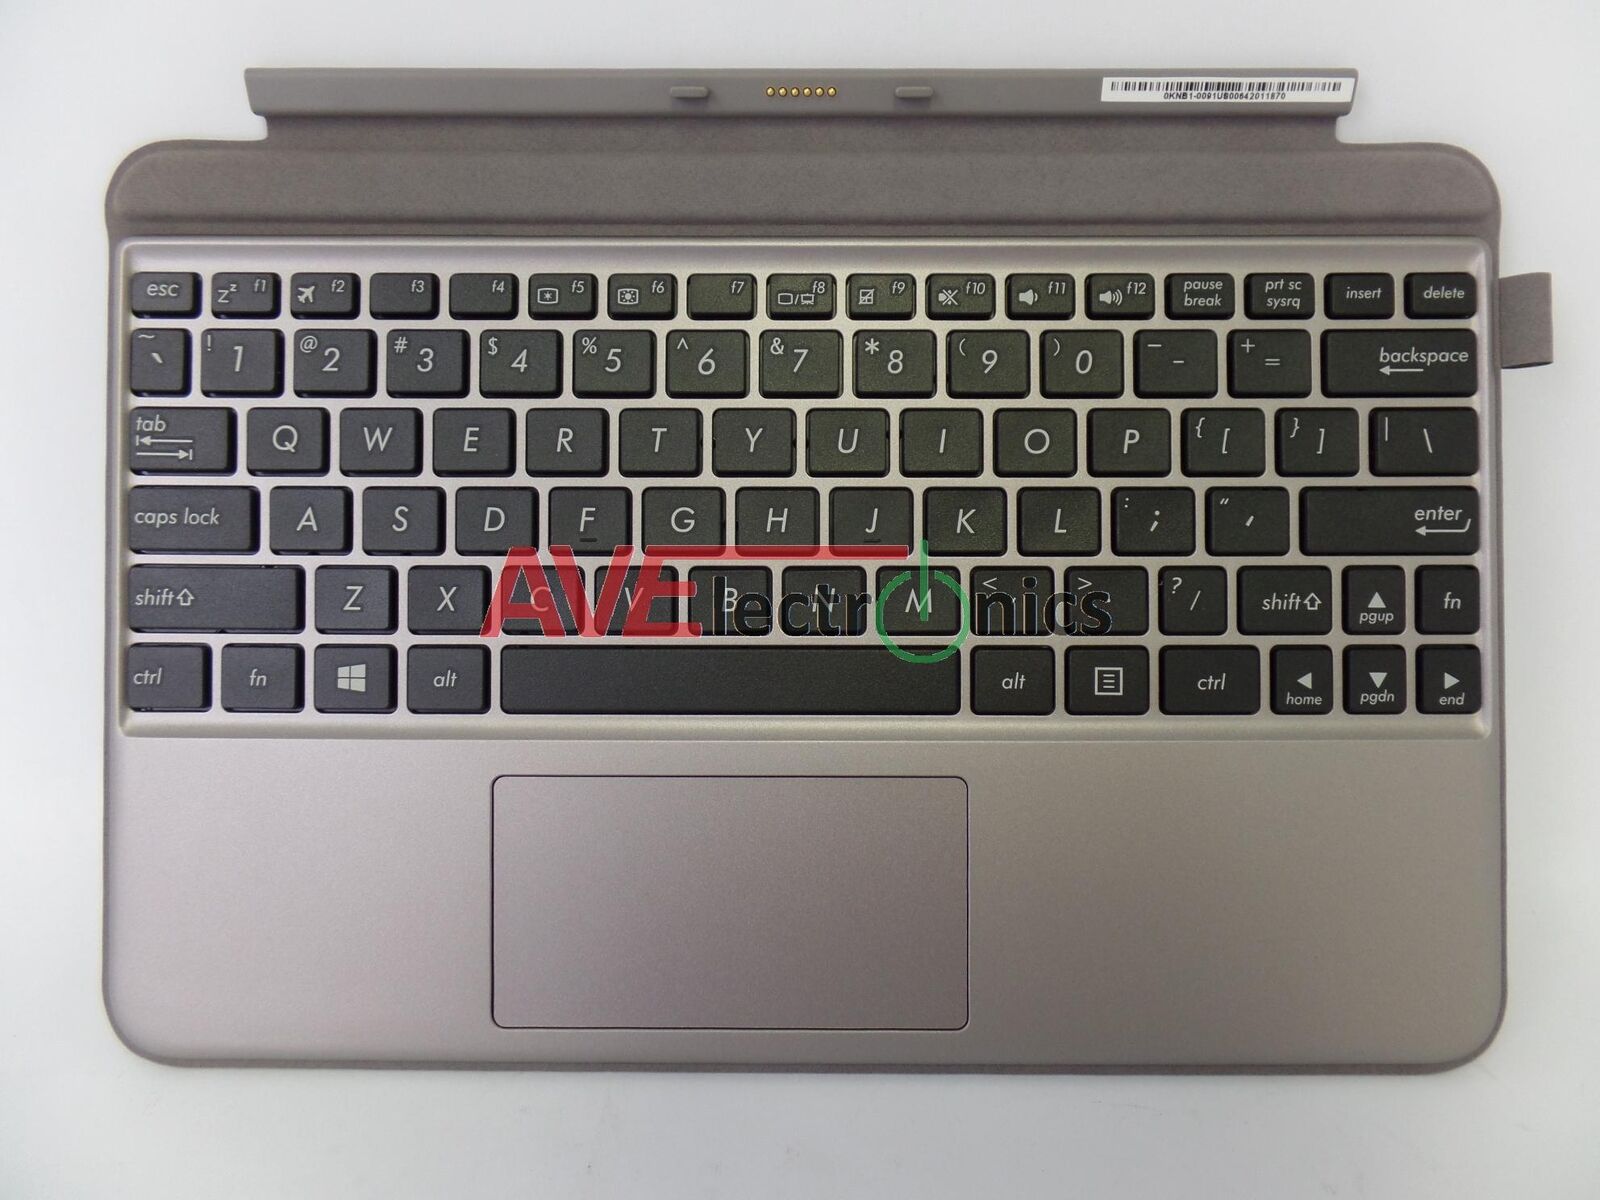 Asus T102HA-3K Gray Keyboard Dock for T102 Tablet OEM Genuine Original Brand New